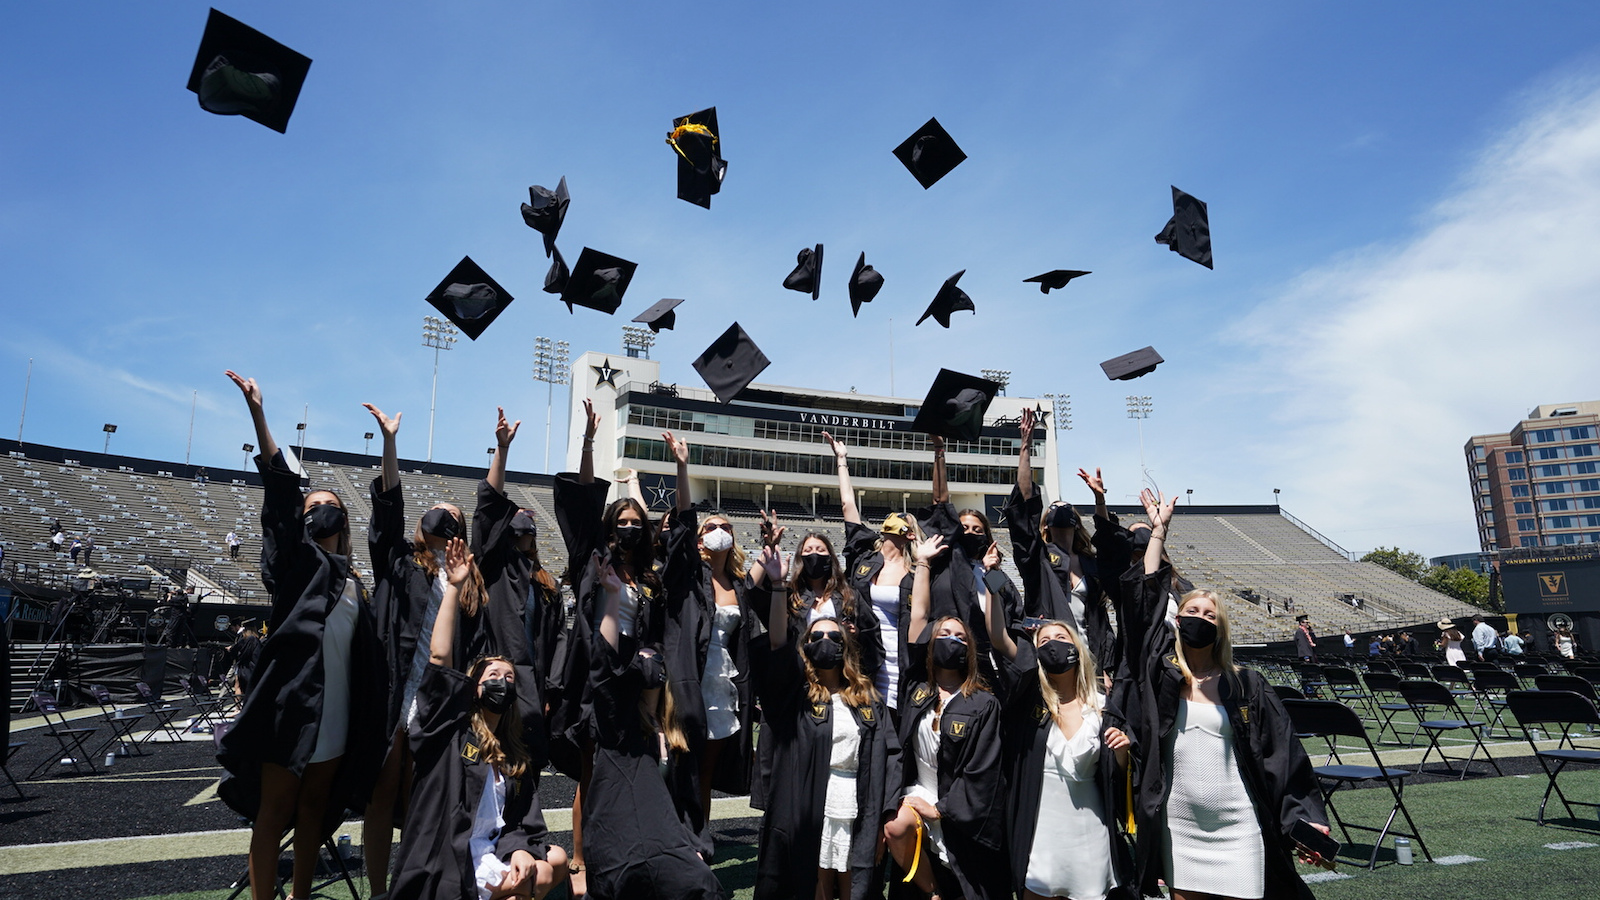 Vanderbilt University Graduation for the Class of 2021, students throwing graduation caps